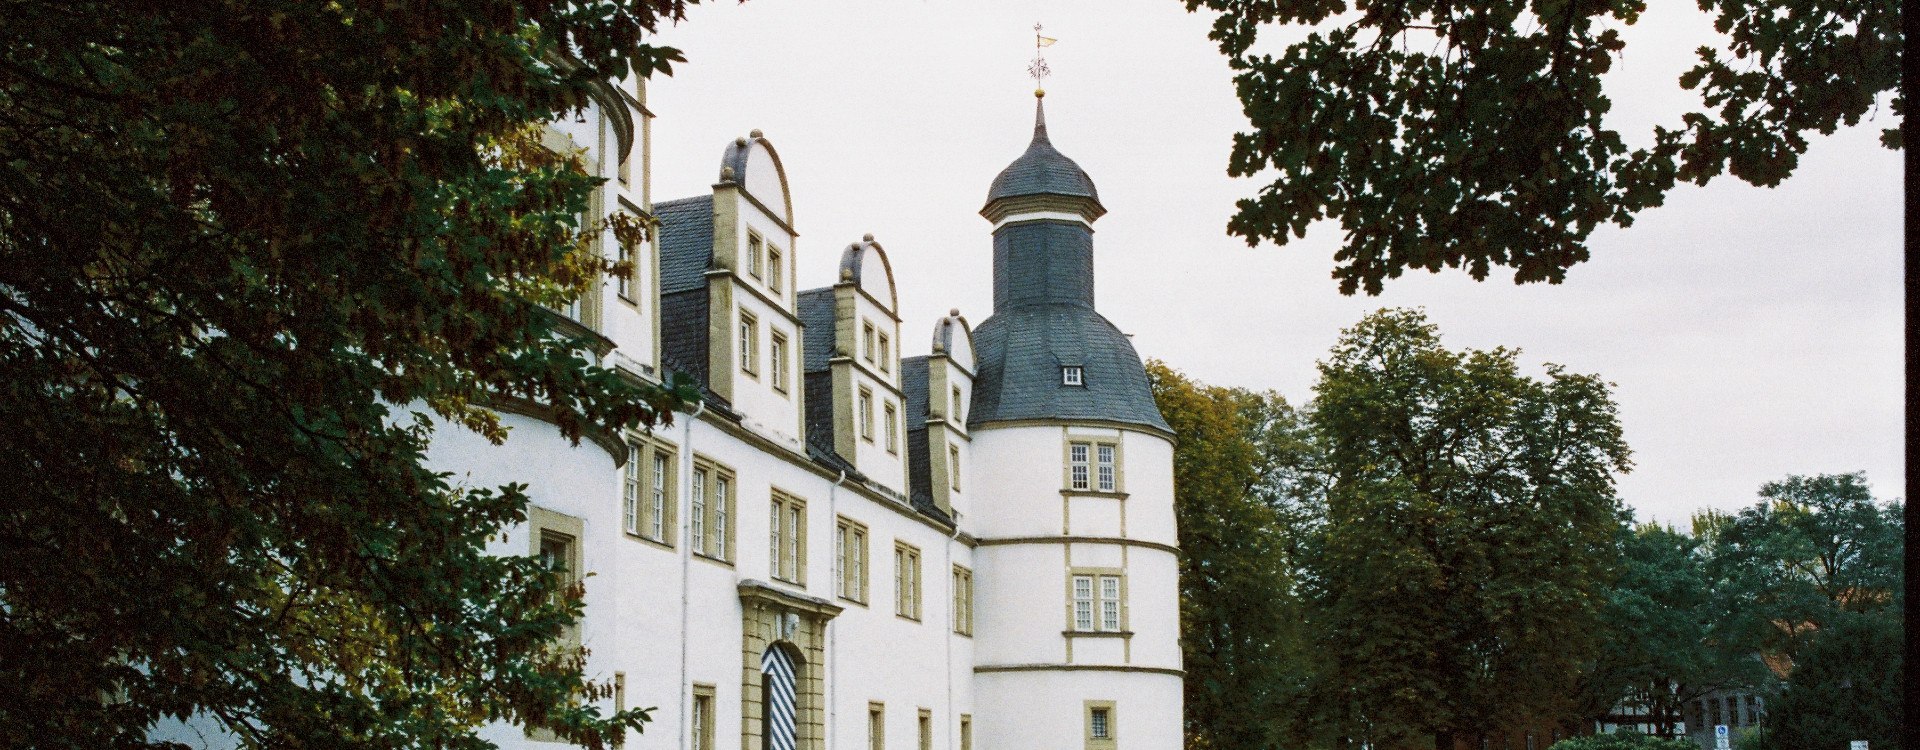 Western wing of Neuhaus Castle, © Johannes Höhn